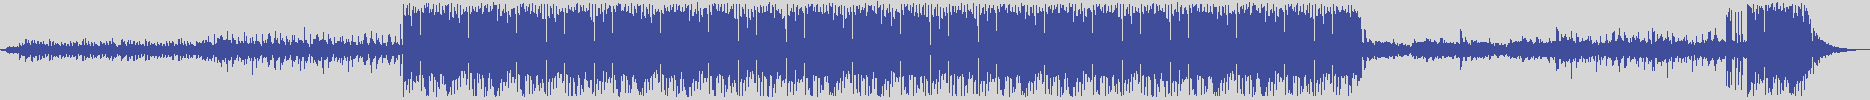 noclouds_chillout [NOC055] Rico Bonetti - Chill Solution [Original Mix] audio wave form